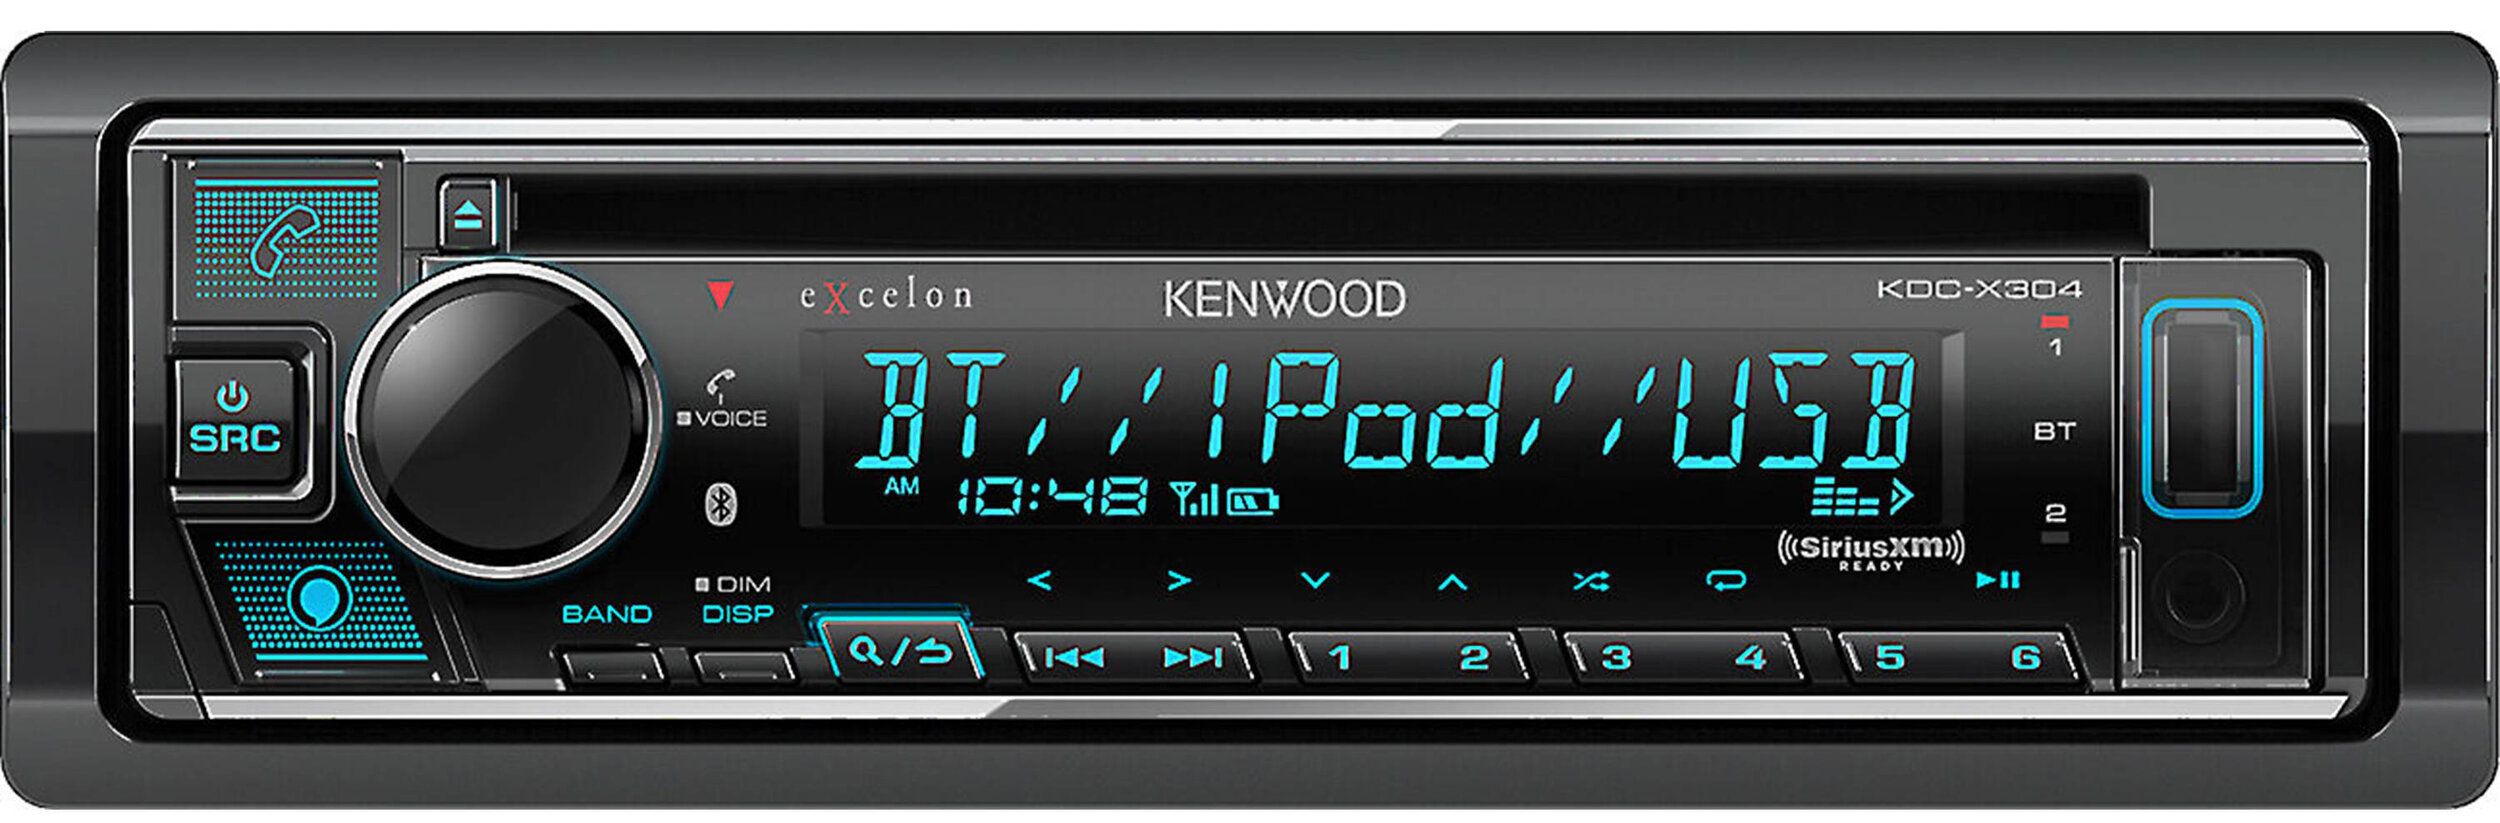 Kenwood Excelon KDC-X304.jpg